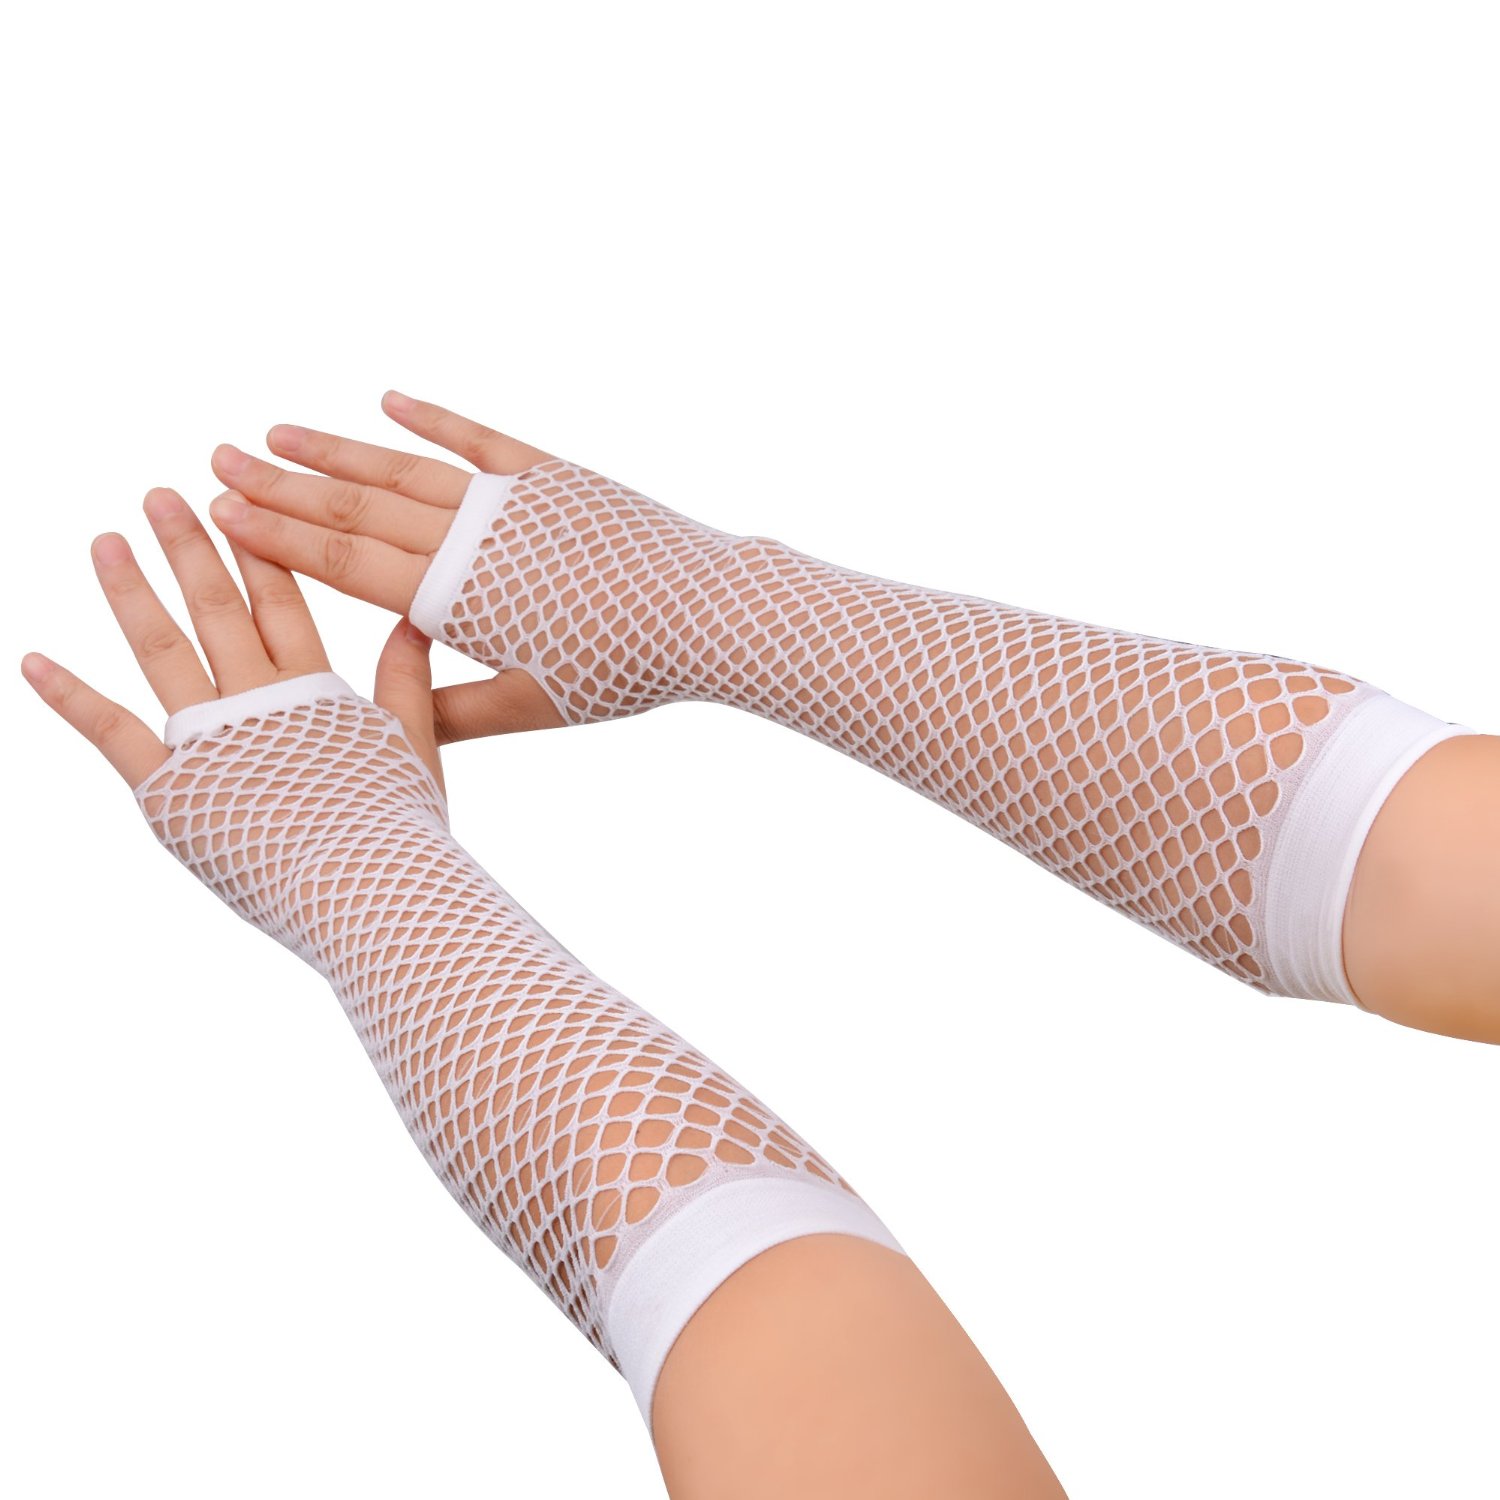 10 Paris Stretchable Fingerless Diva Gloves Eco